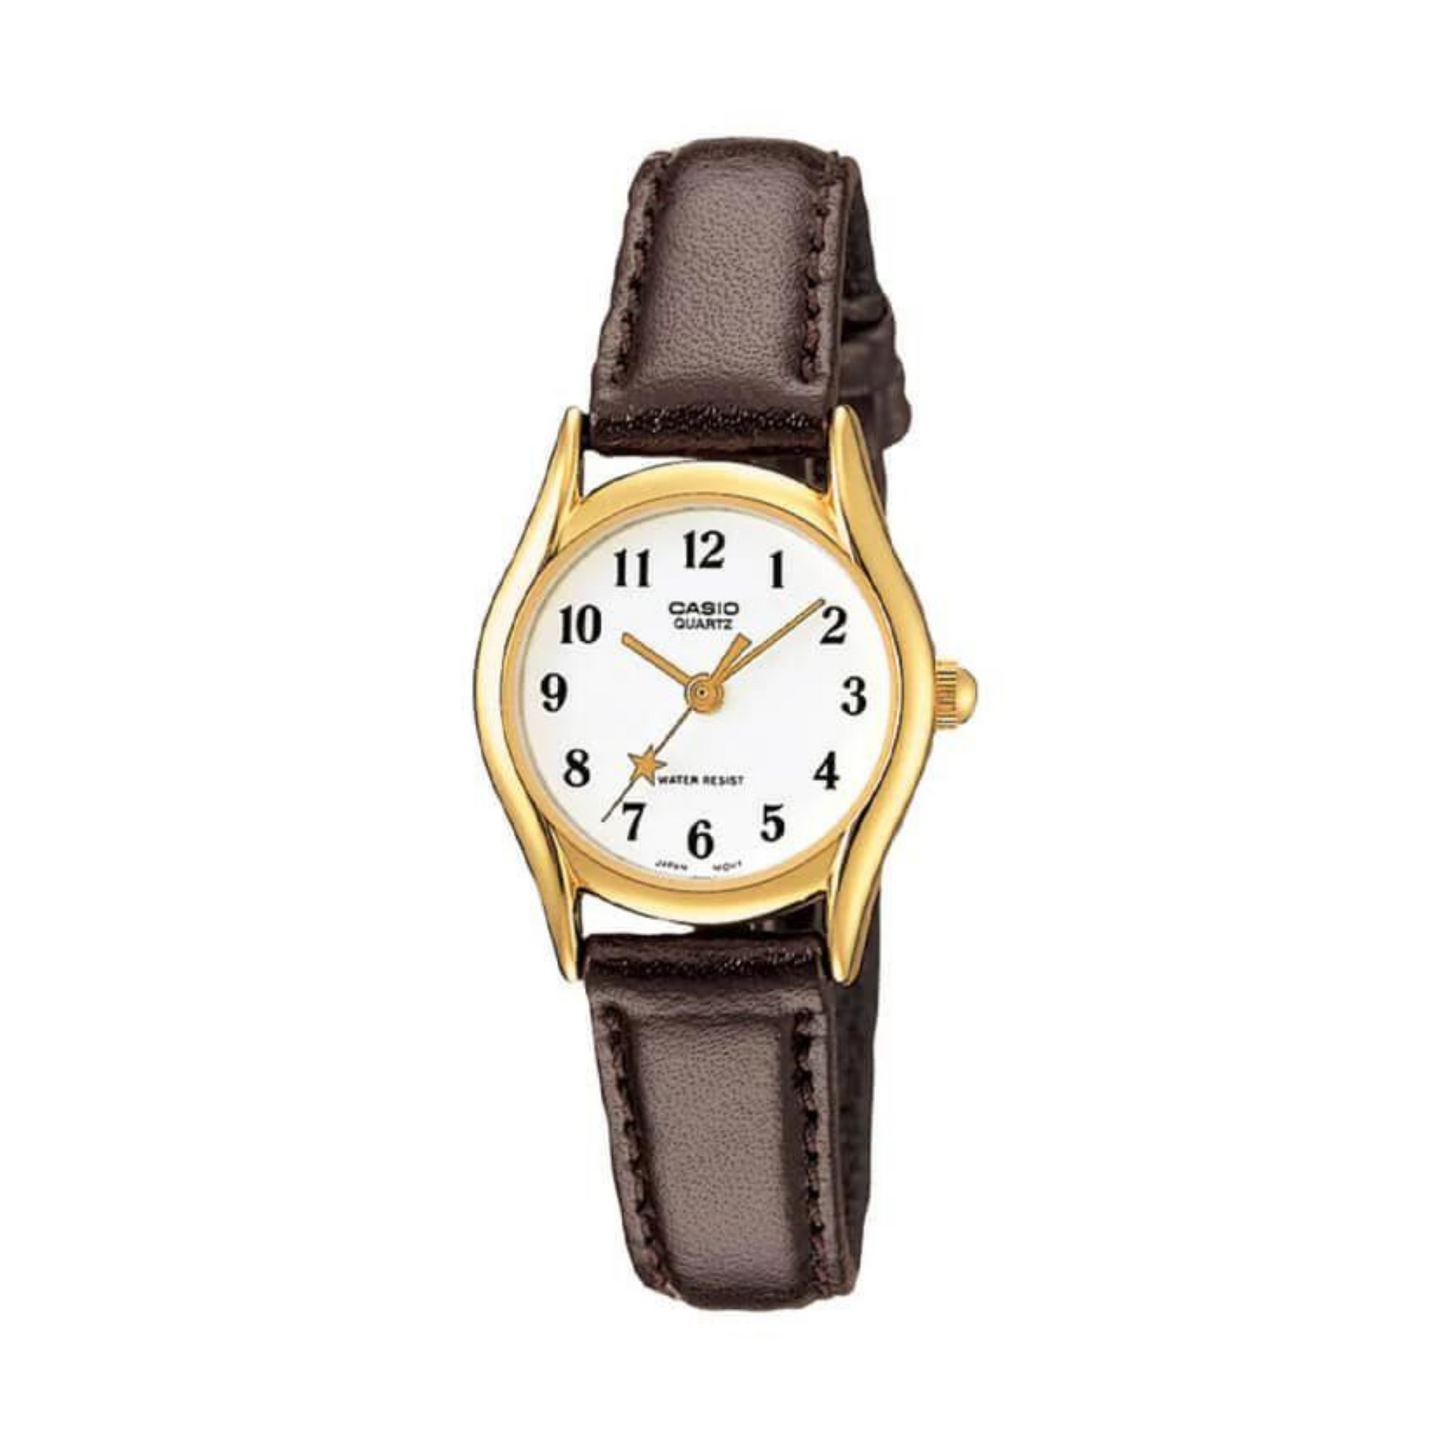 Reloj Casio mujer Modelo LTP-1094Q-7B4